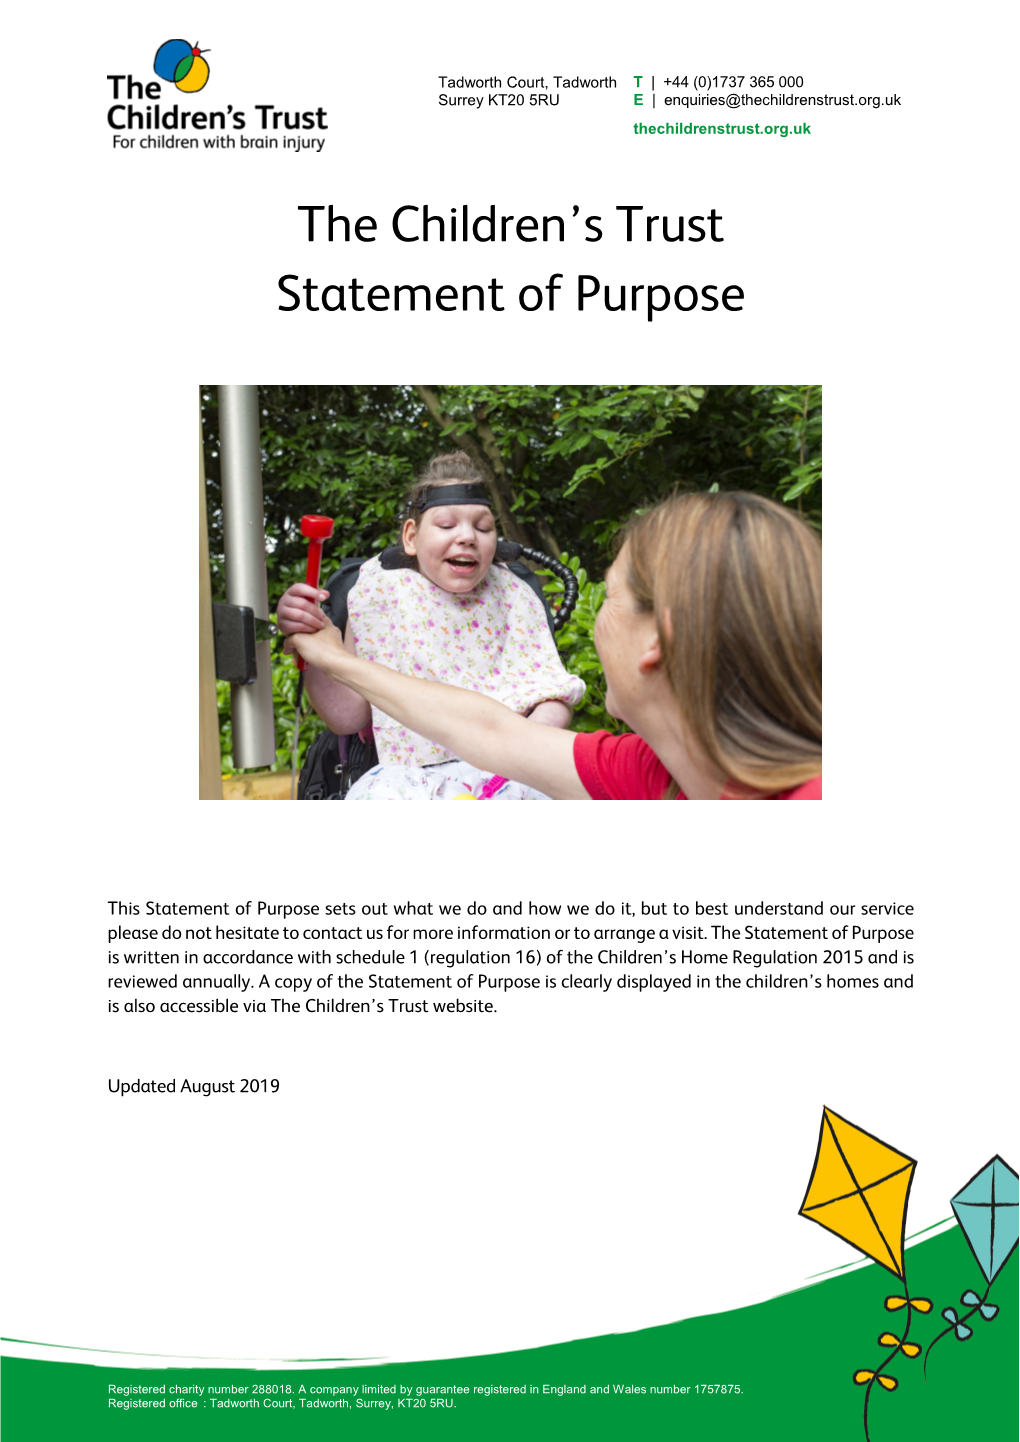 The Children's Trust Statement of Purpose